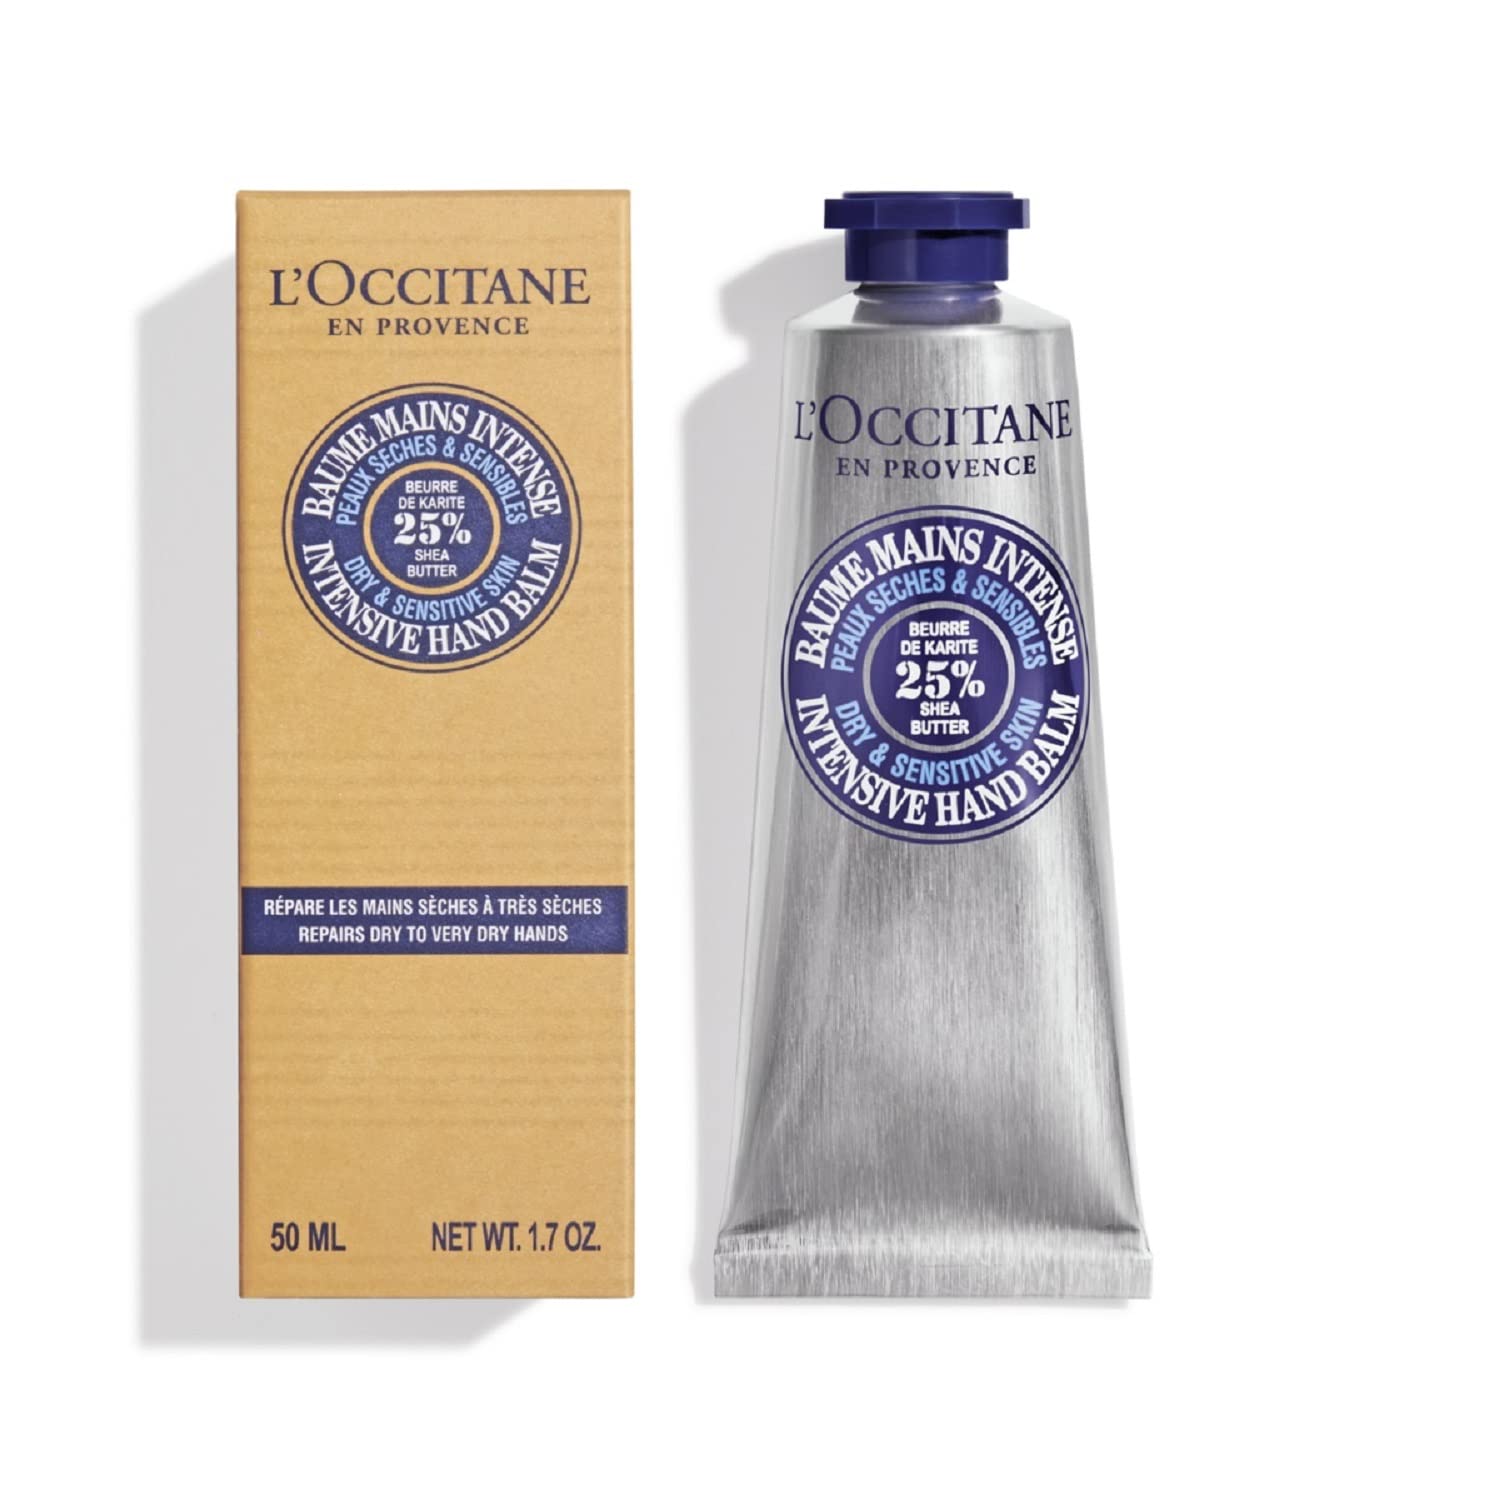 L'Occitane Nourishing & Intensive Hand Balm with 25% Organic Shea Butter and Allantoin, Net Wt. 1.7 oz.